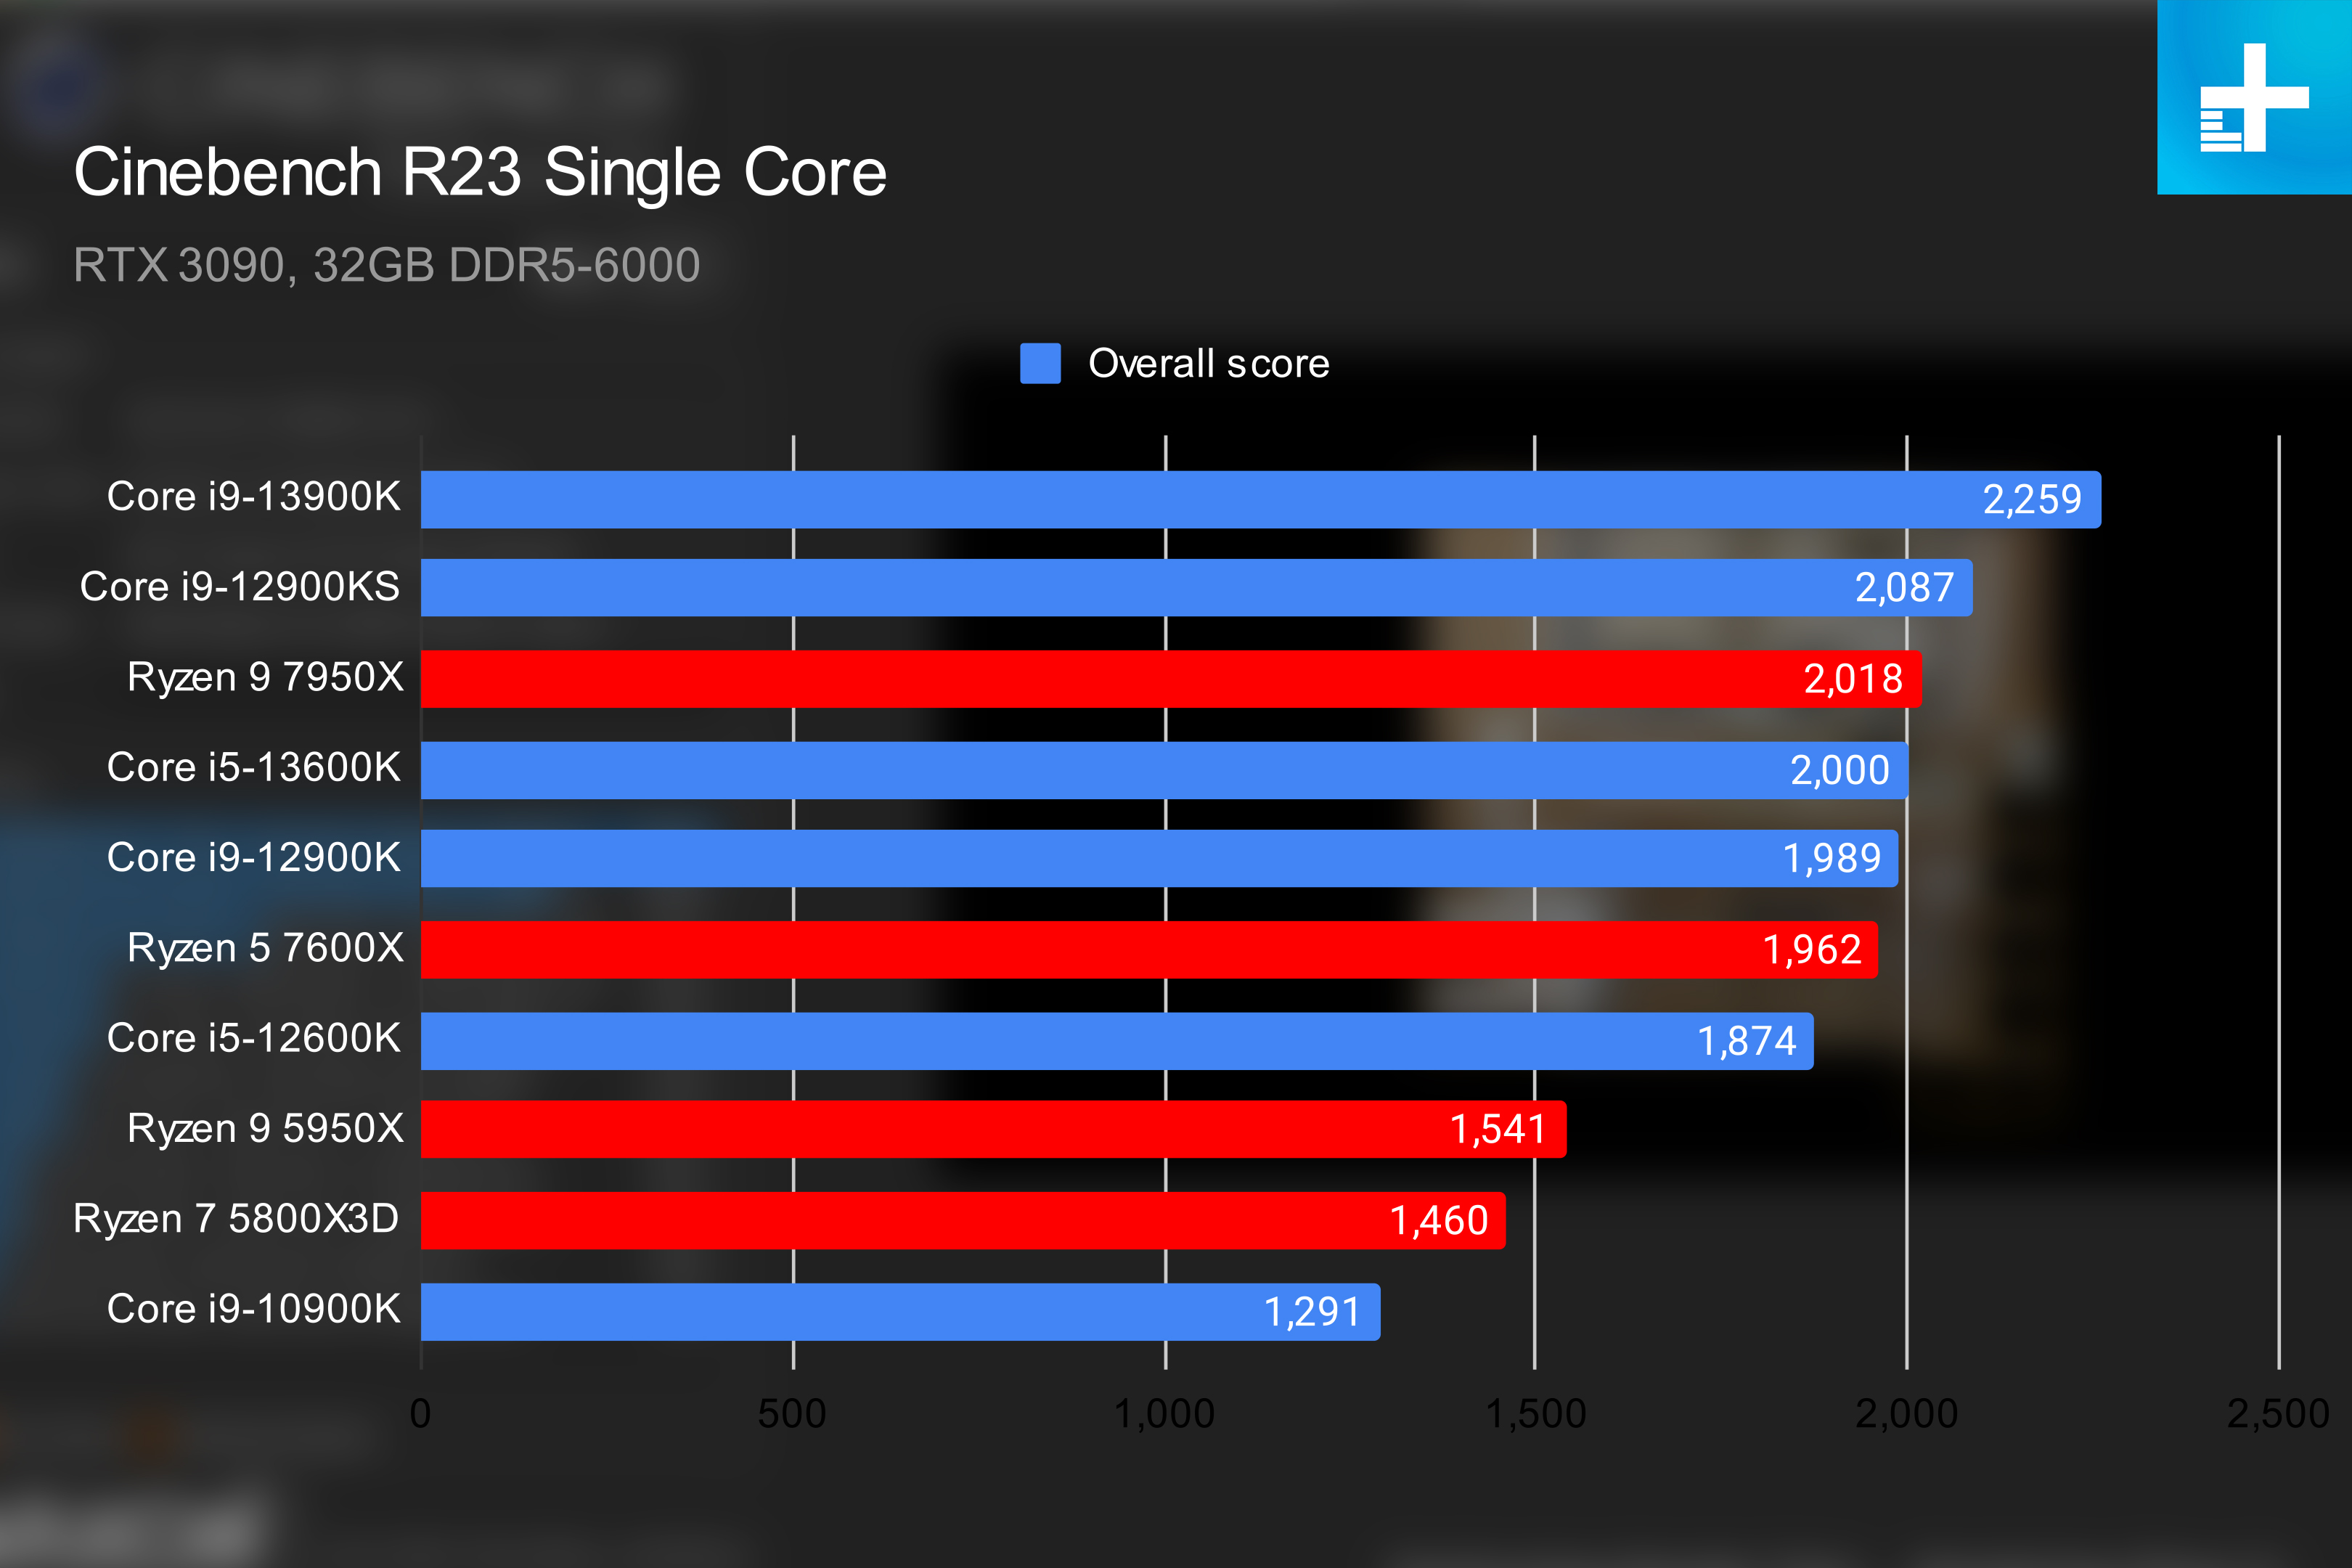 AMD vs Intel 